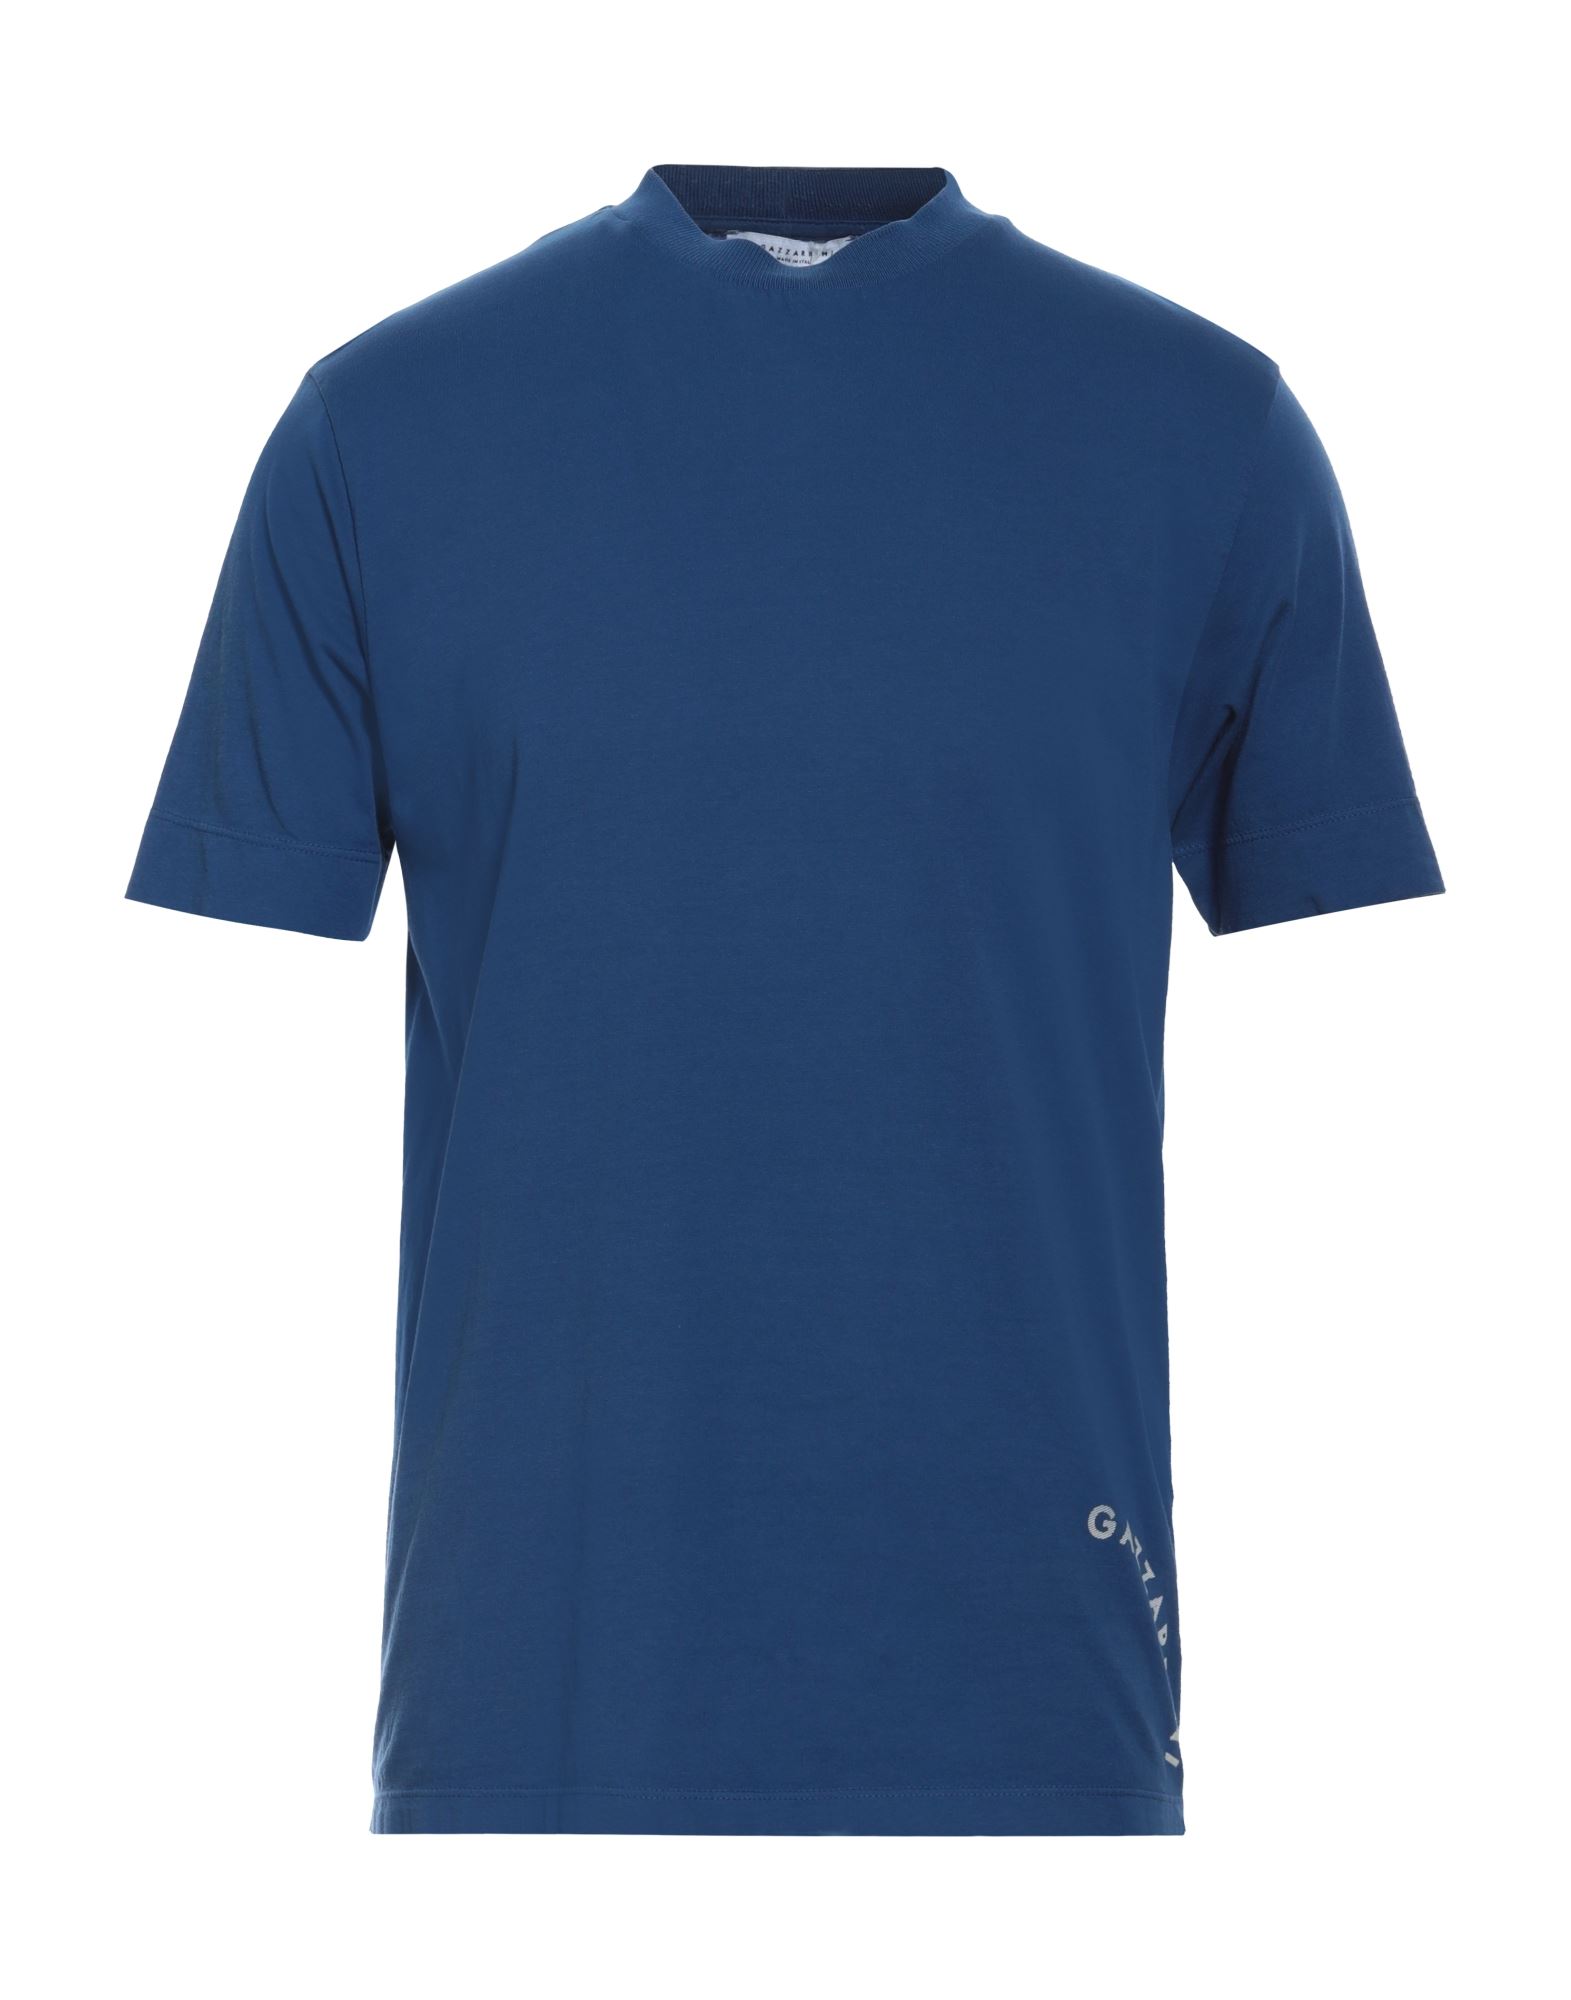 Gazzarrini T-shirts In Navy Blue